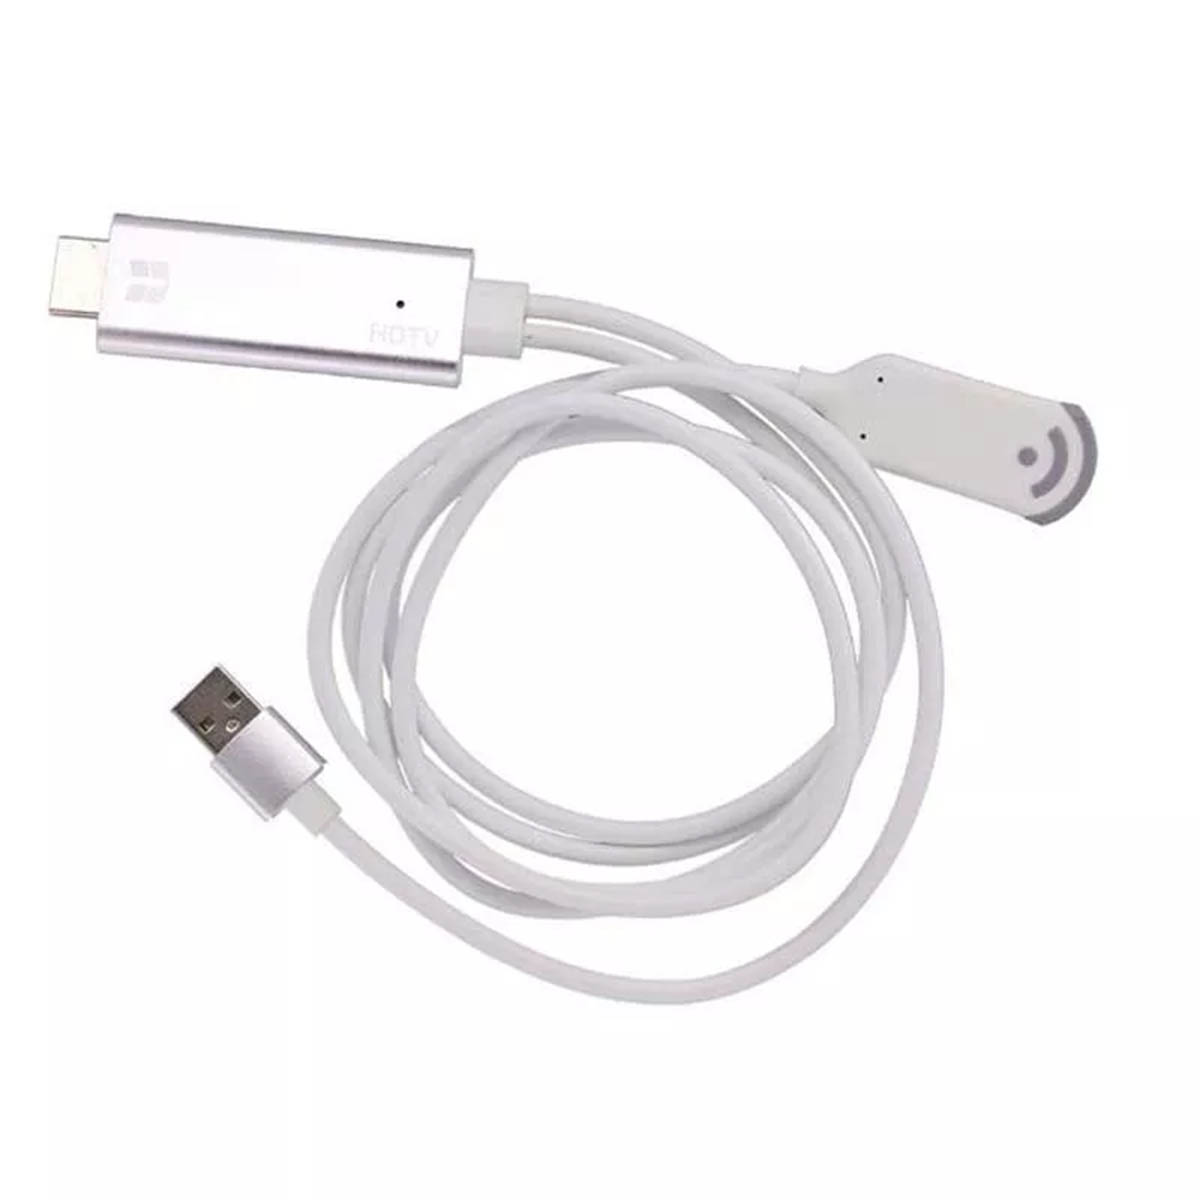 Беспроводной TV адаптер Onten HDMI, Wi-Fi, USB, длина 1.1 метр, цвет белый